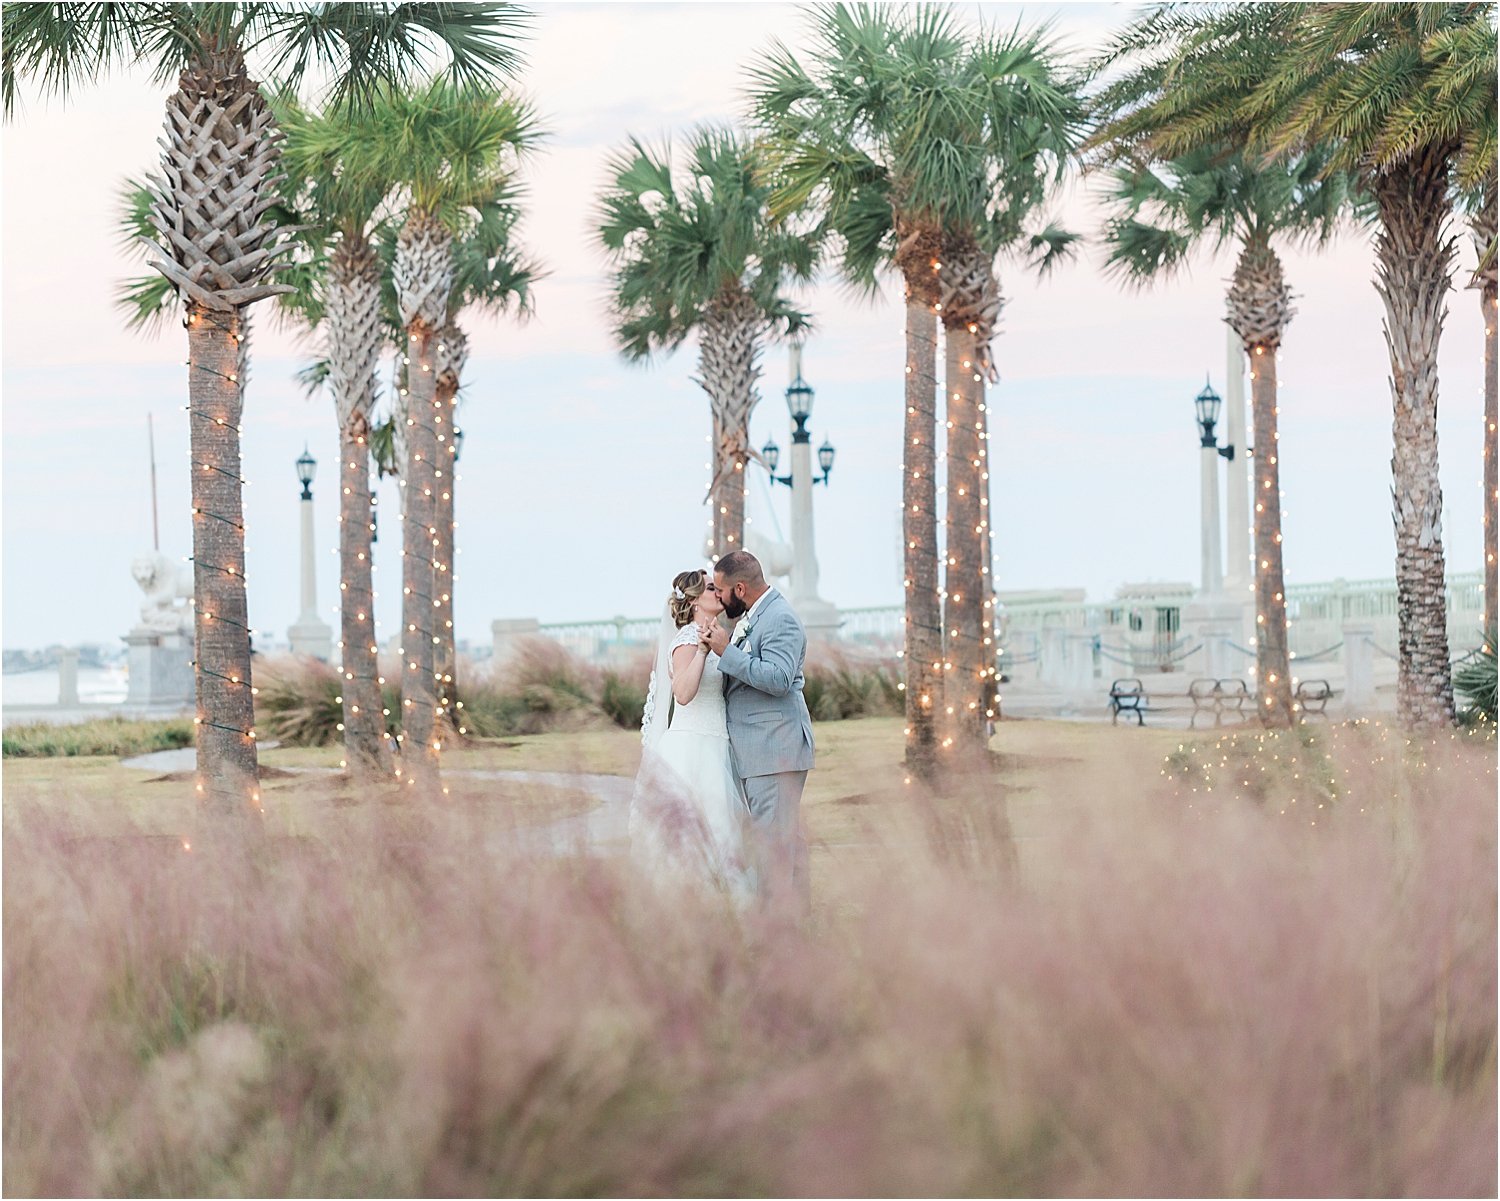 Kasey and Tyler's Wedding at Bayfront Marin St. Augustine, Florida- Jacksonville, Ponte Vedra Beach, St. Augustine, Amelia Island, Florida and Destination Fine Art Film Wedding Photography_0021.jpg